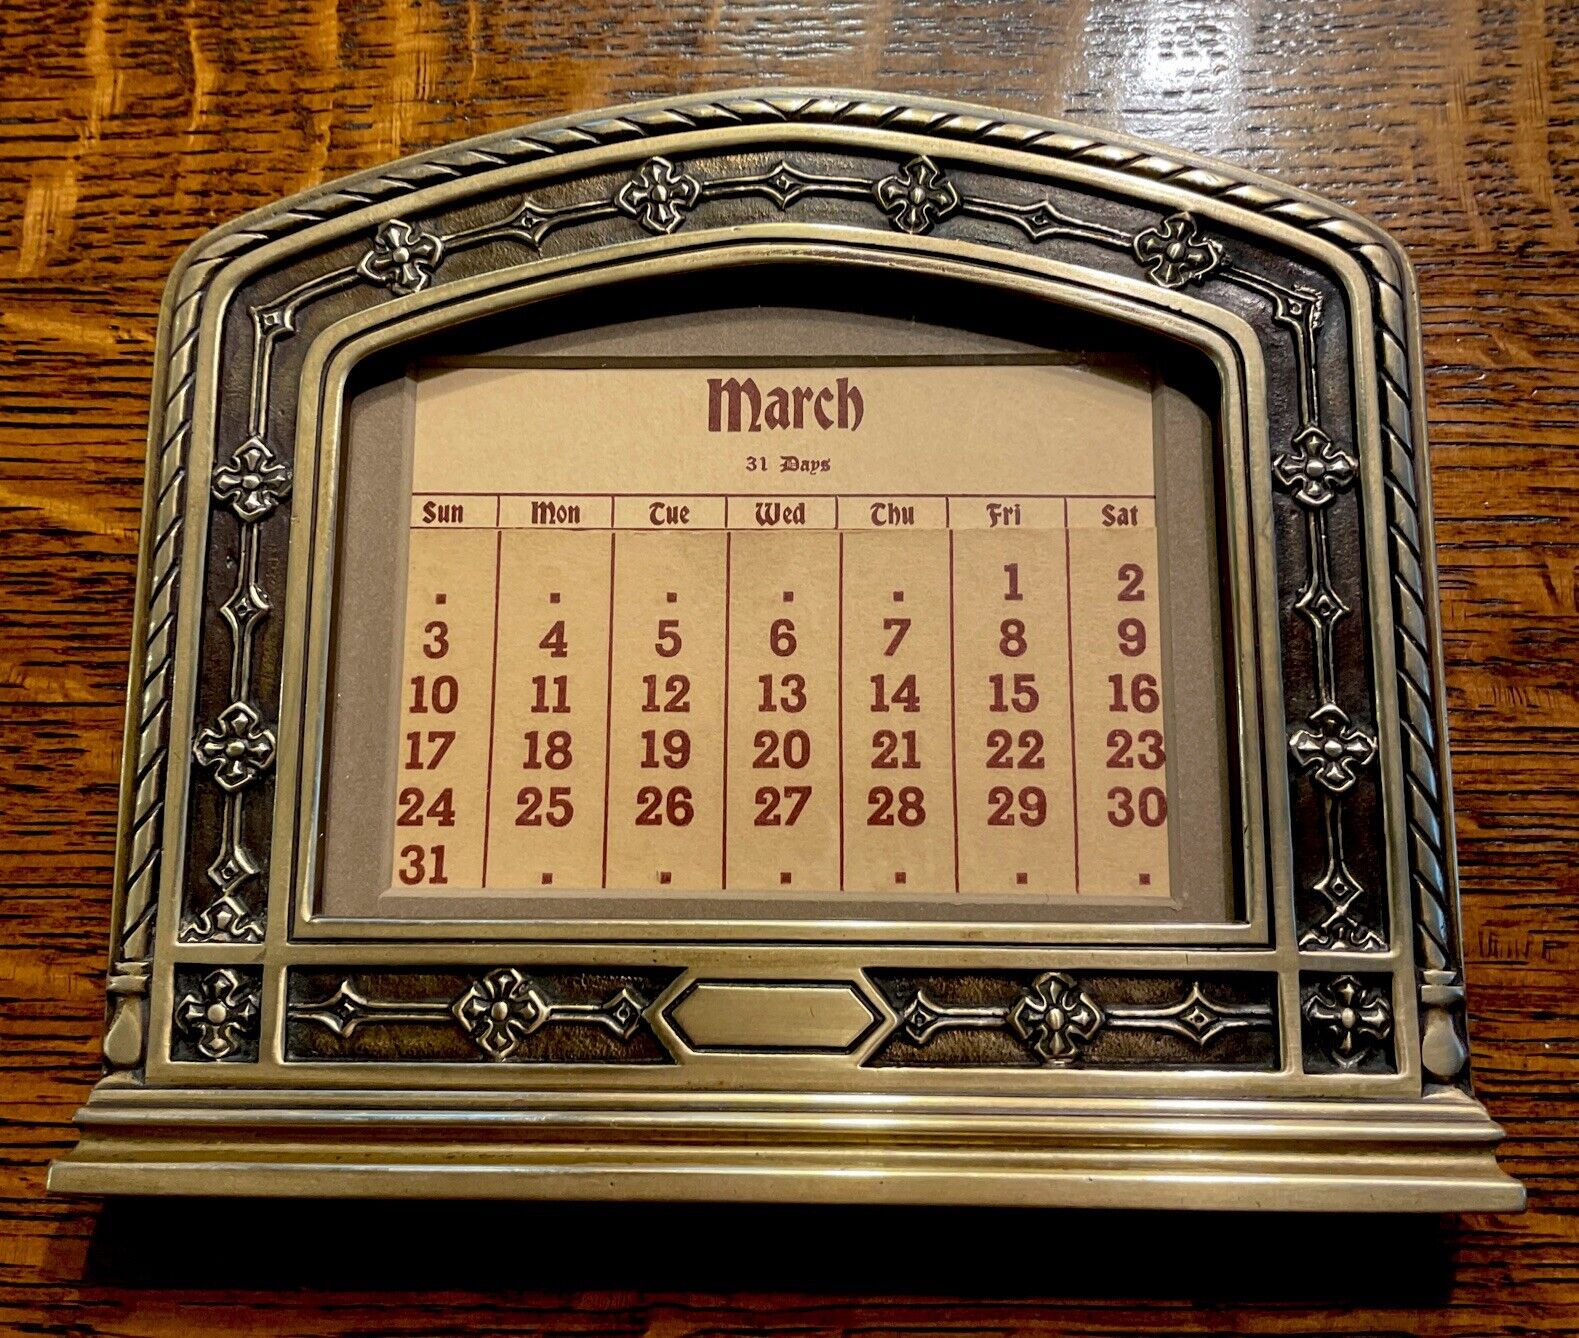 Tiffany & Co. Perpetual Calendar Frame w/Stand #21534 Z: Original Inserts c1930